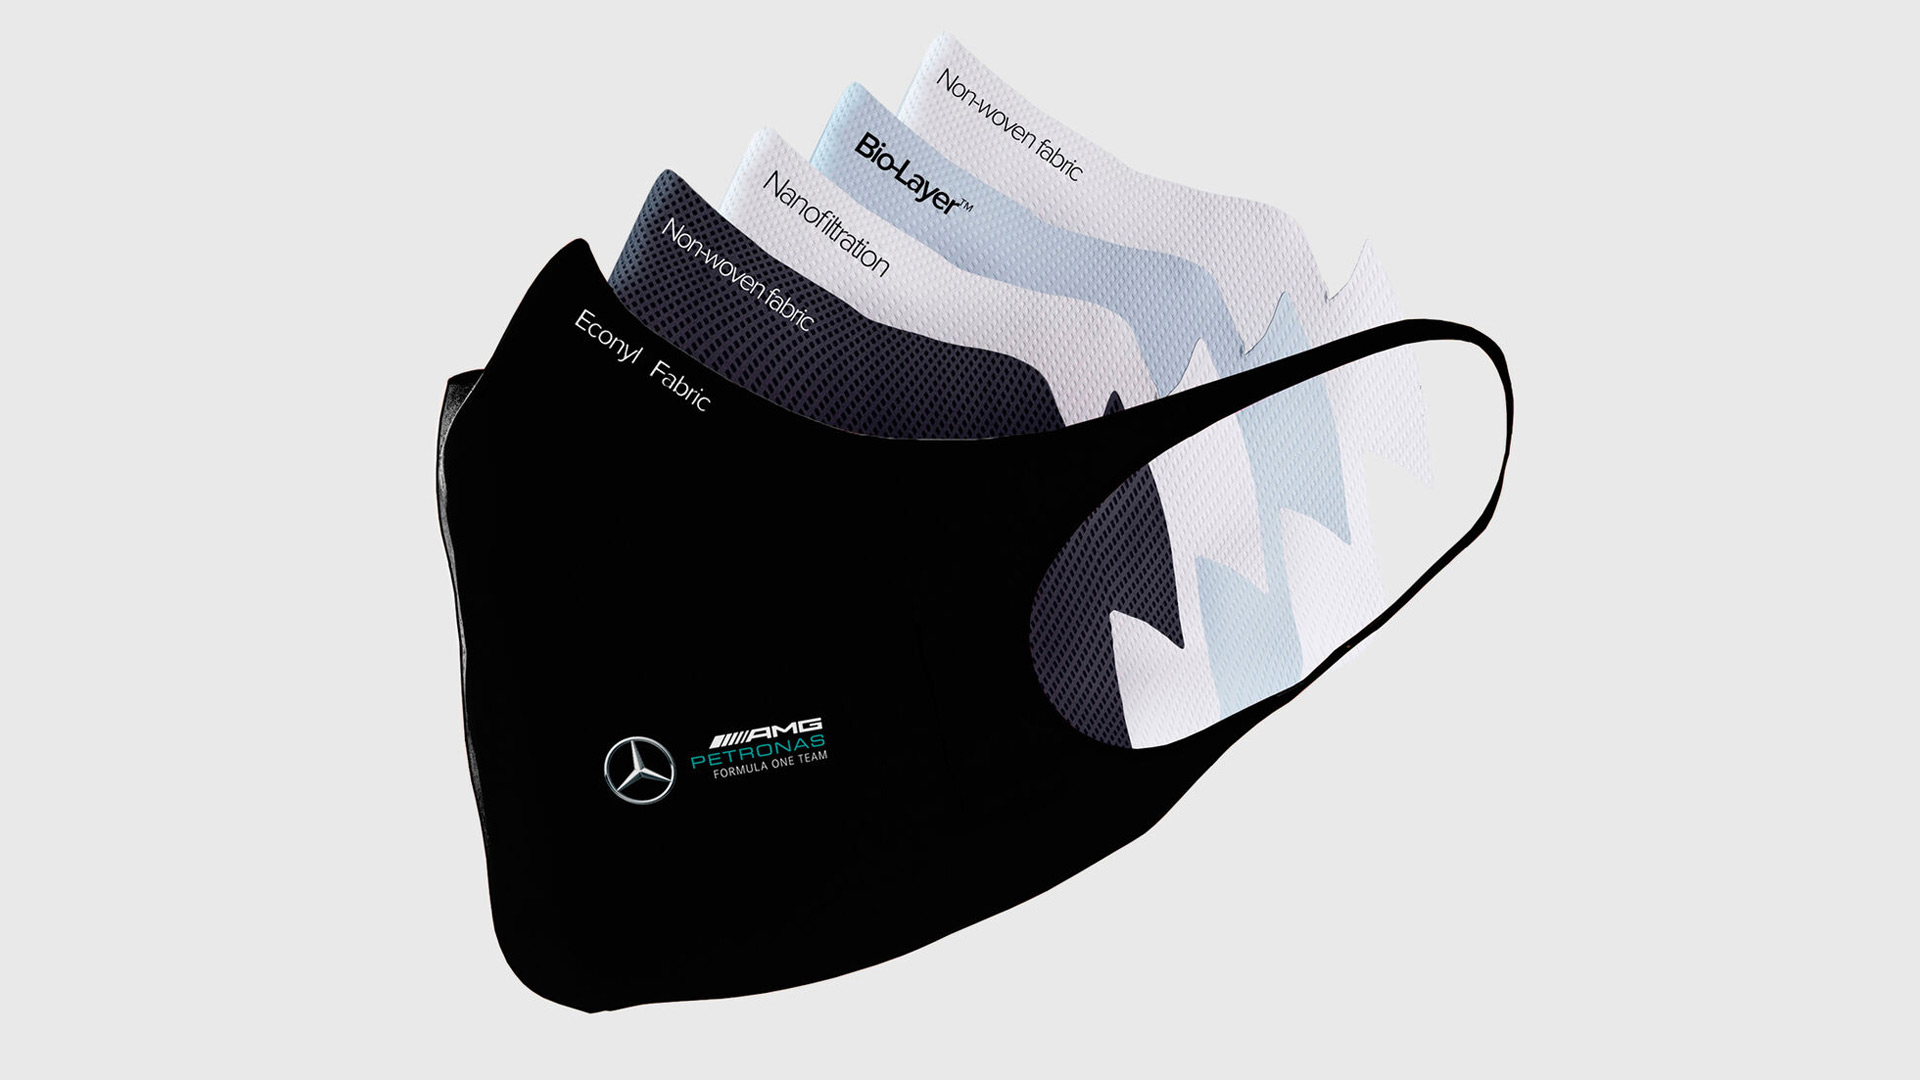 Mercedes-AMG Team Face Mask - £ 35.